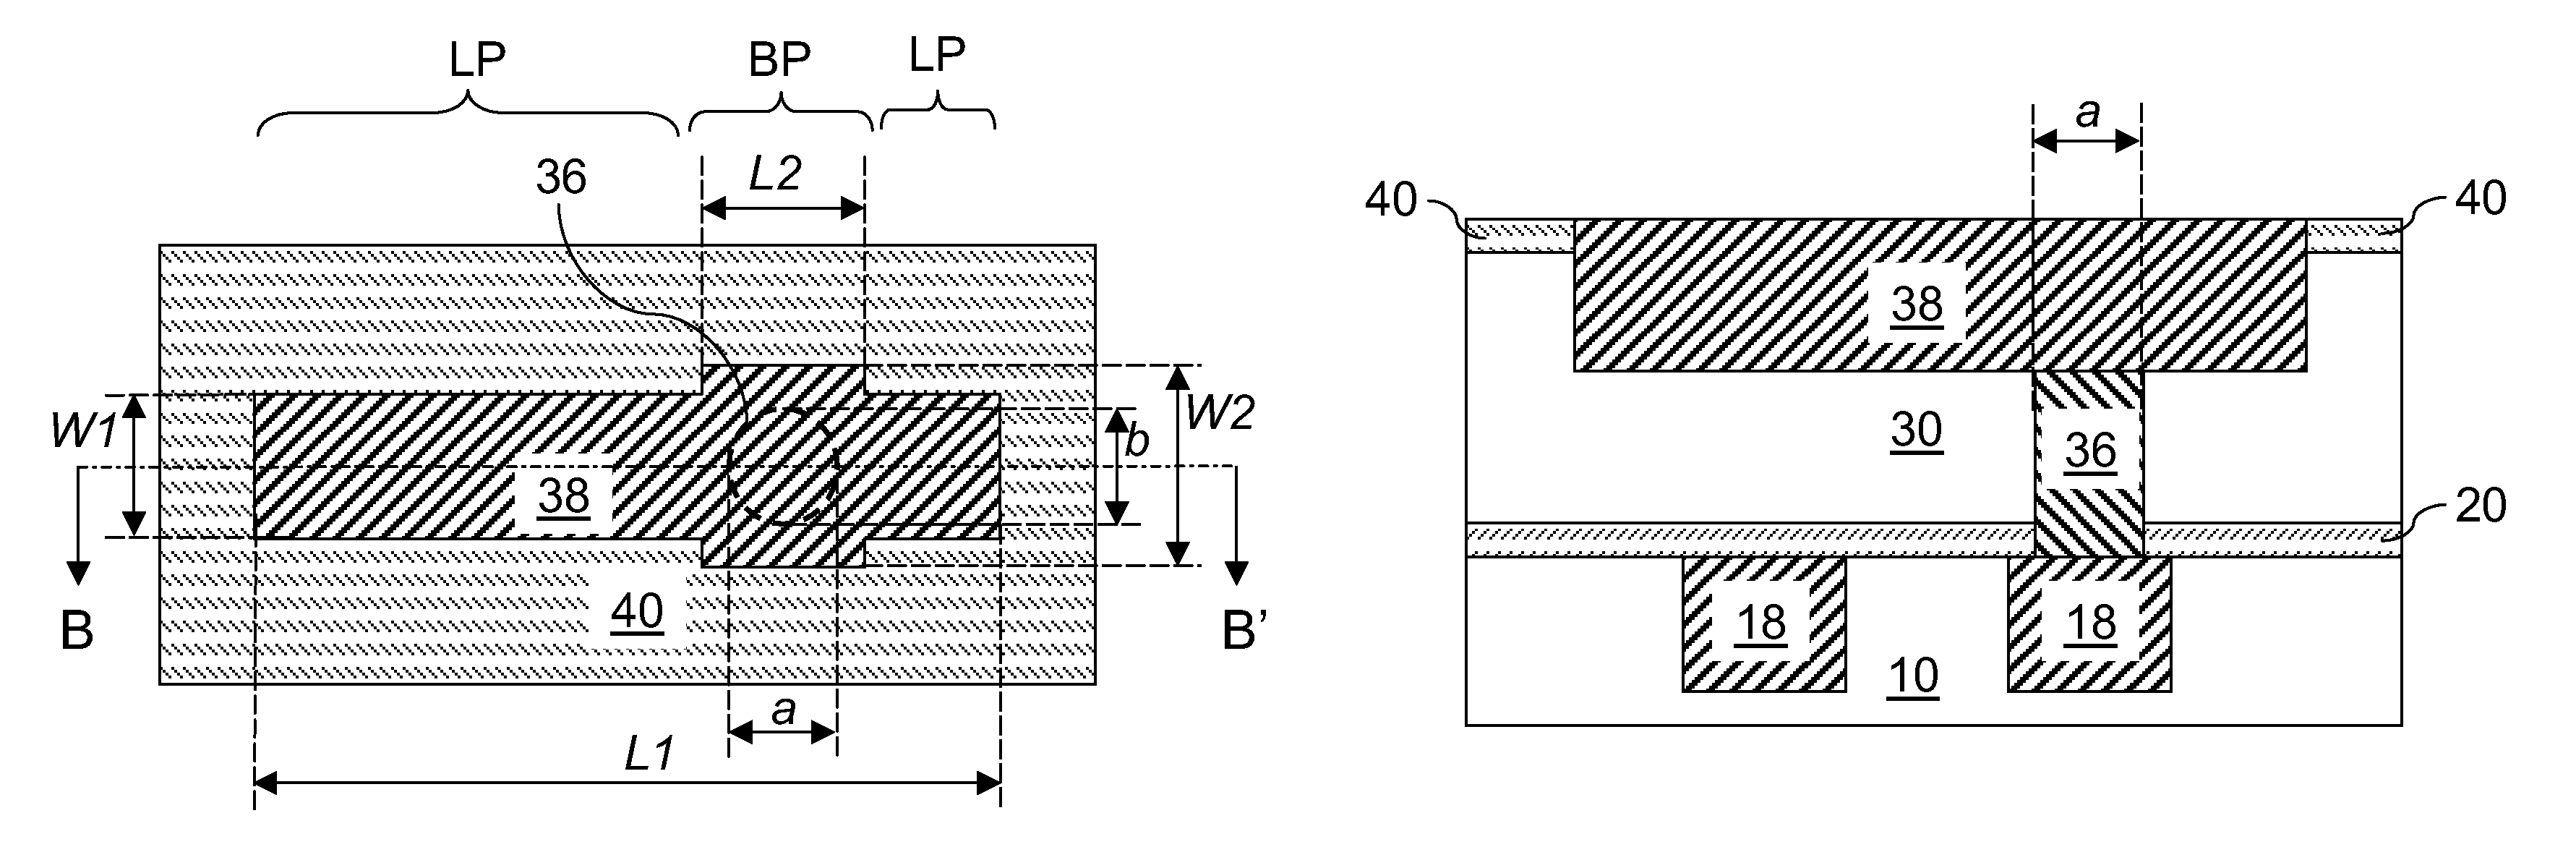 Dual damascene metal interconnect structure having a self-aligned via